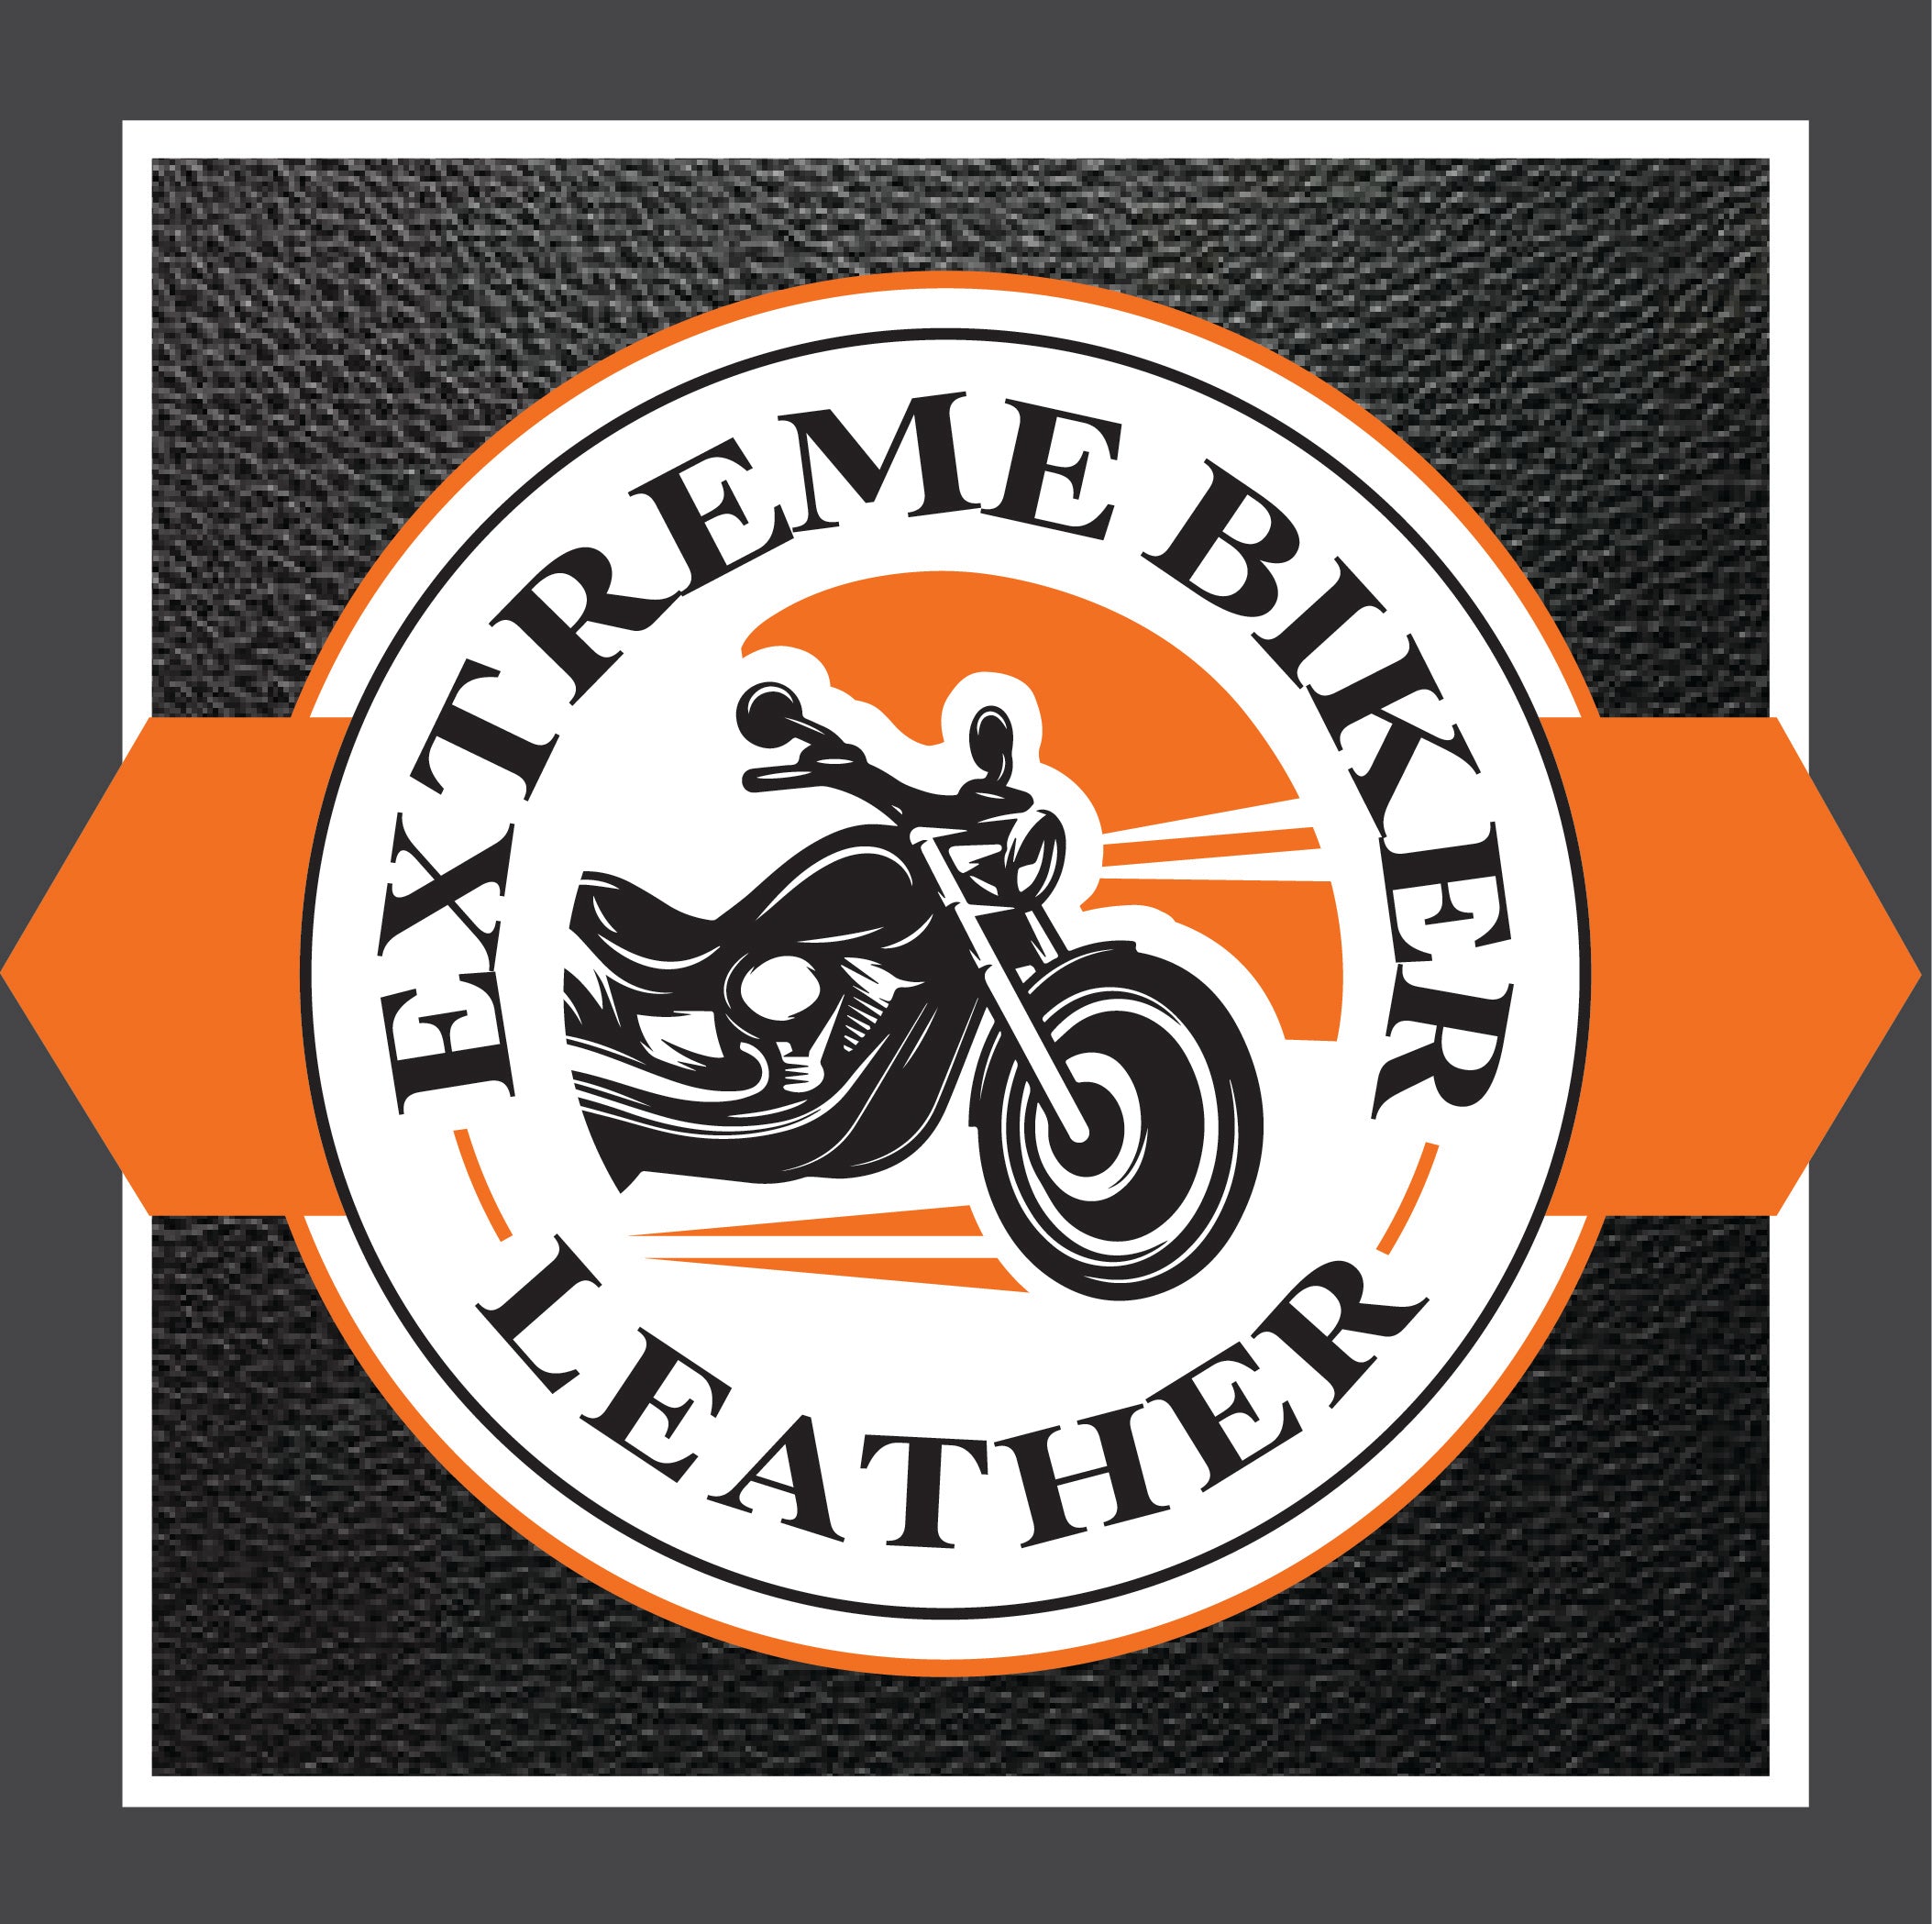 Sharp Shooter (Black) Men's Motorcycle Leather Vest